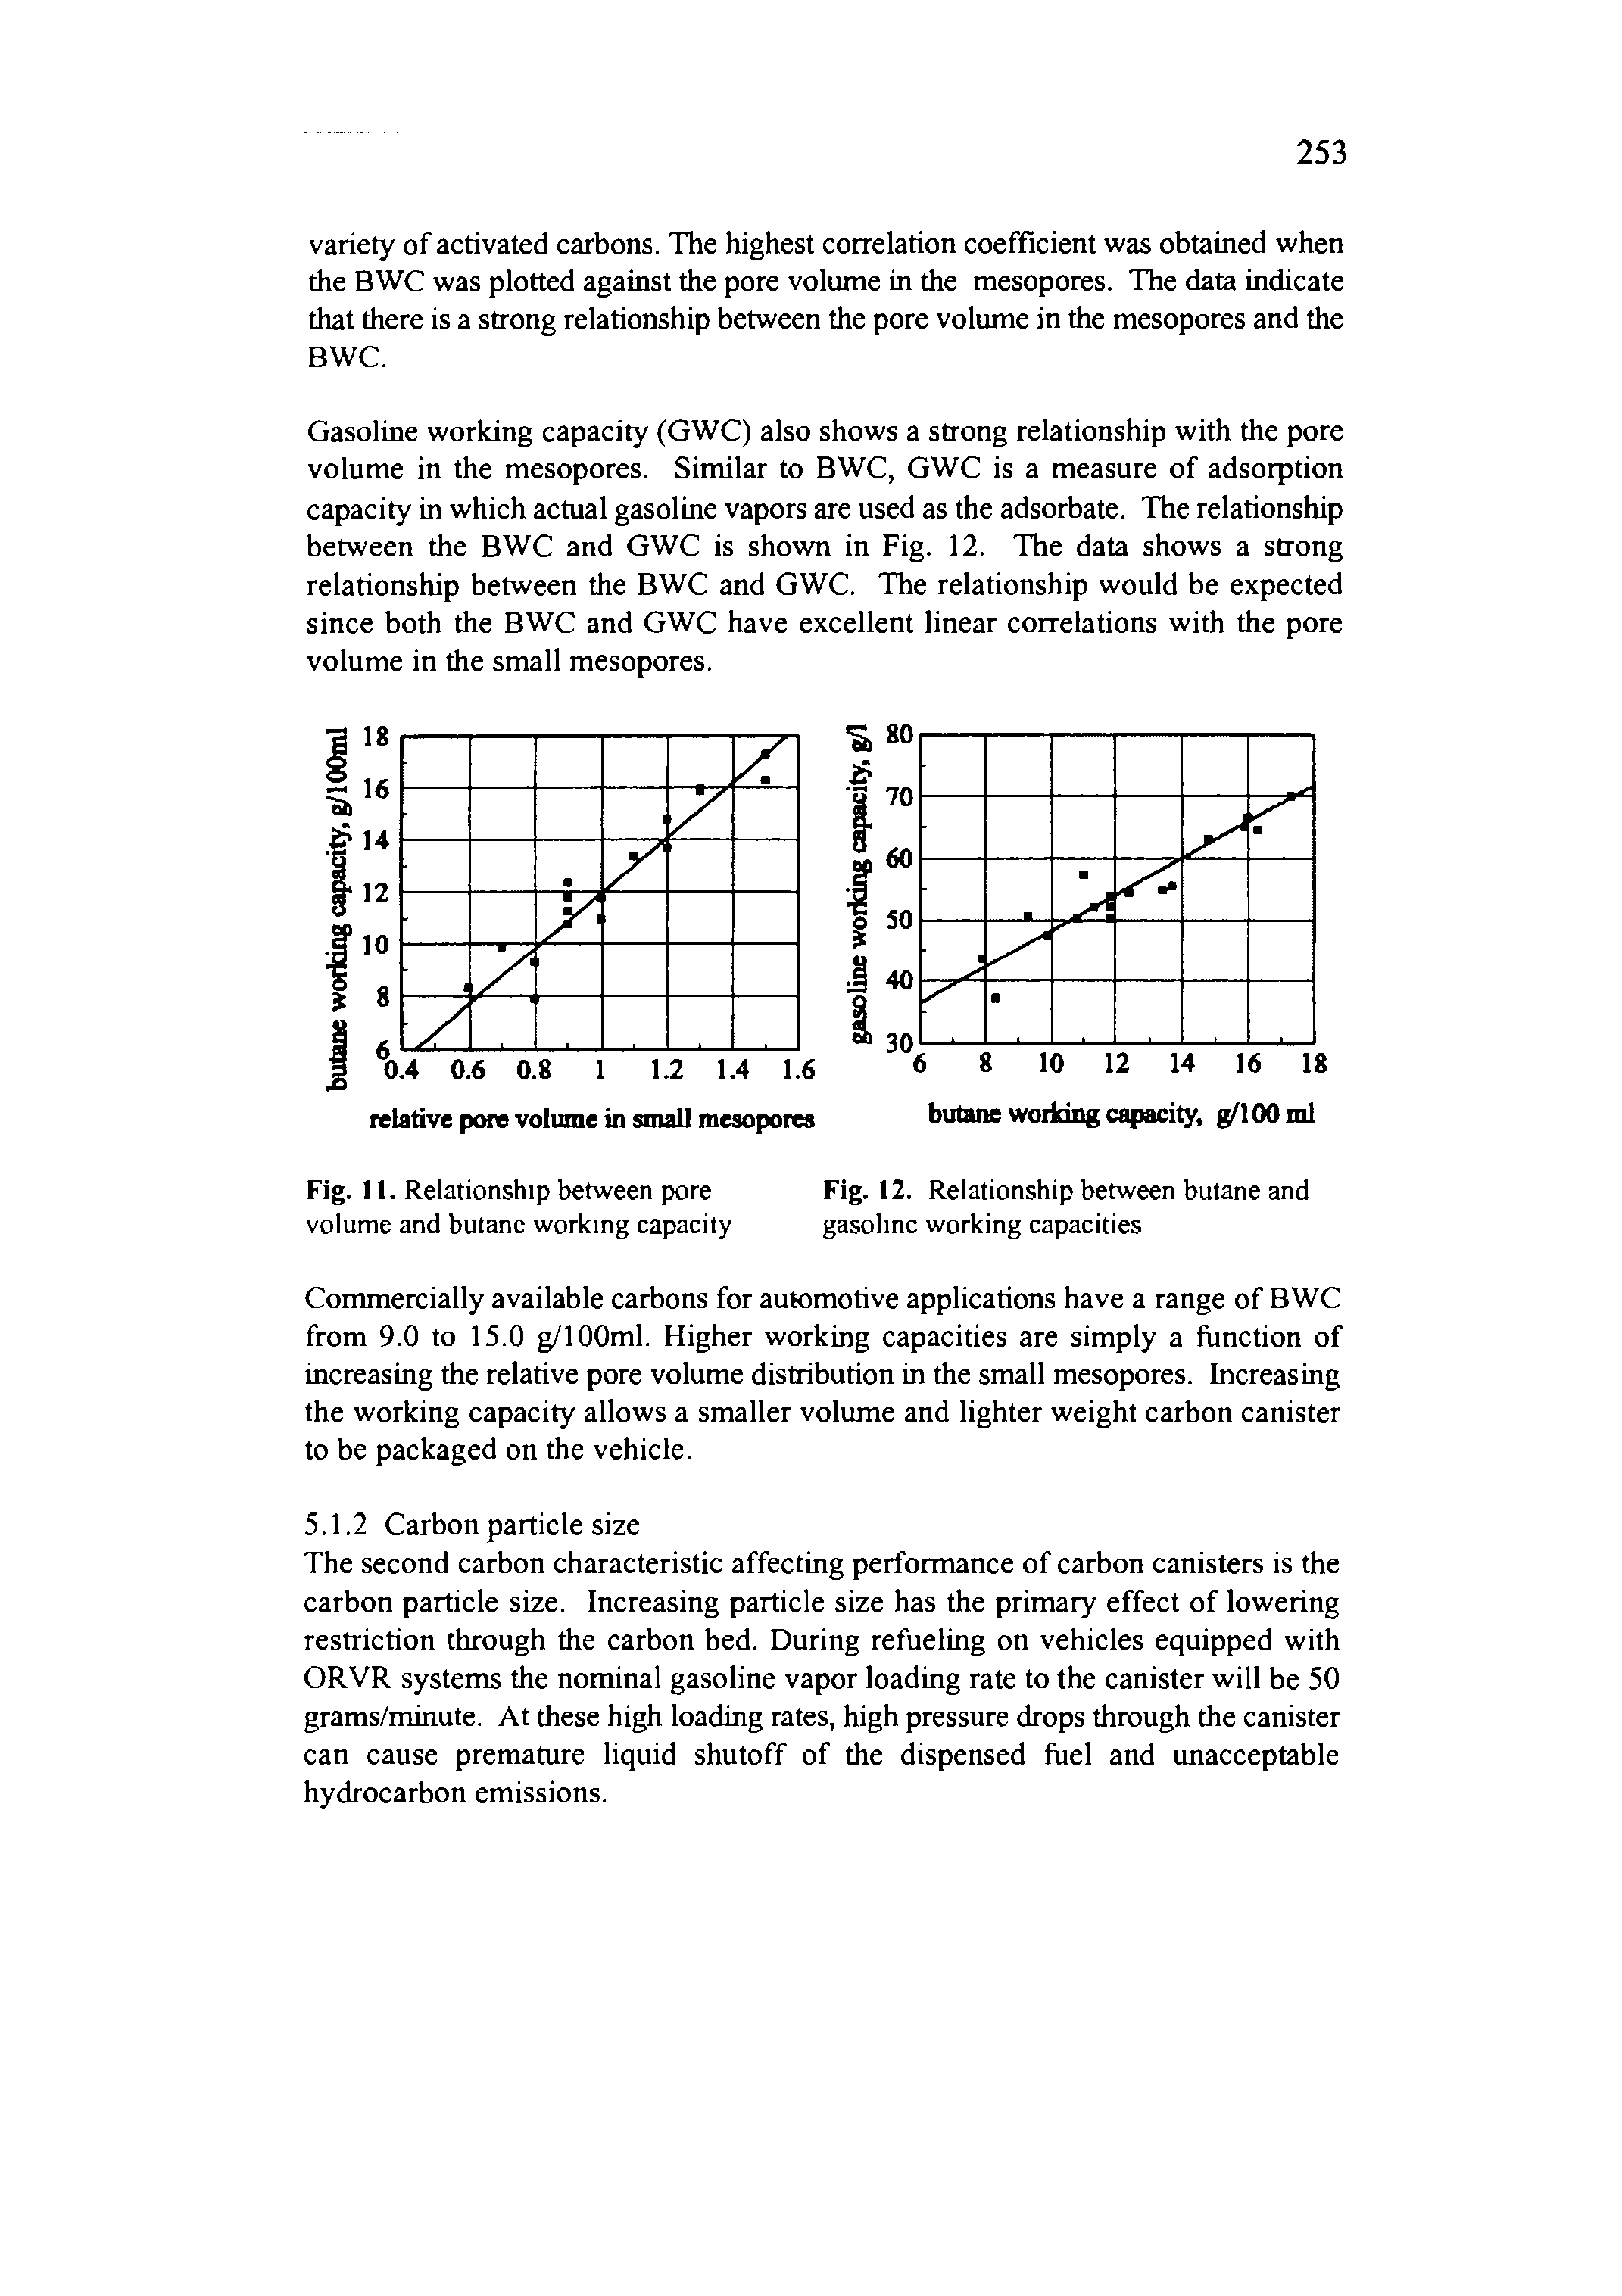 Fig. 12. Relationship between butane and gasoline working capacities...